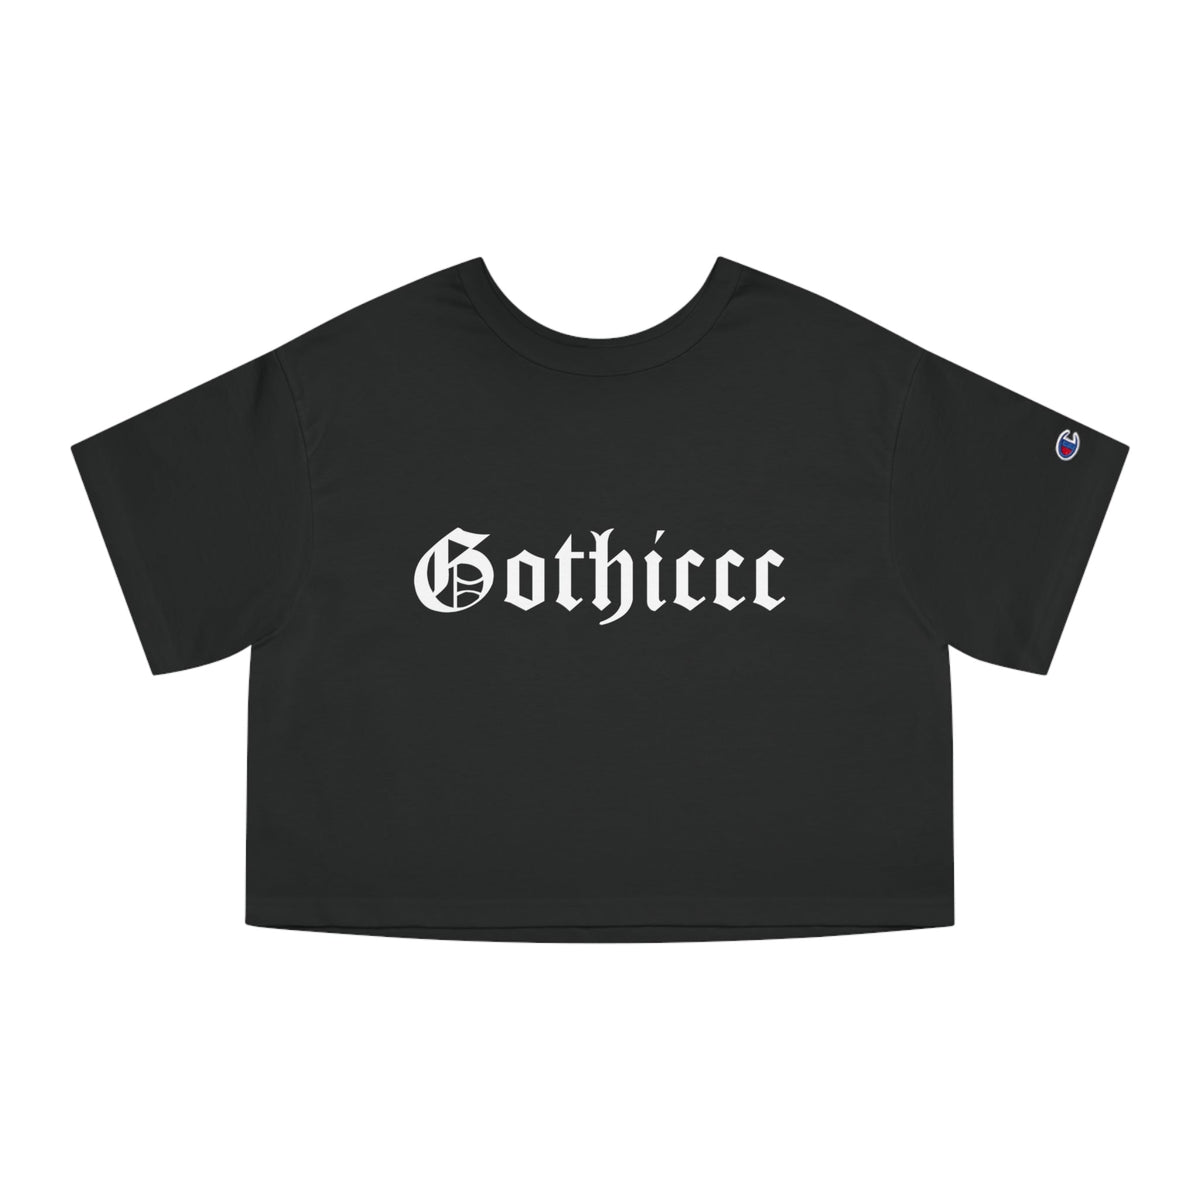 Gothiccc Heavyweight Cropped T-Shirt - Goth Cloth Co.T-Shirt17734994029324140659